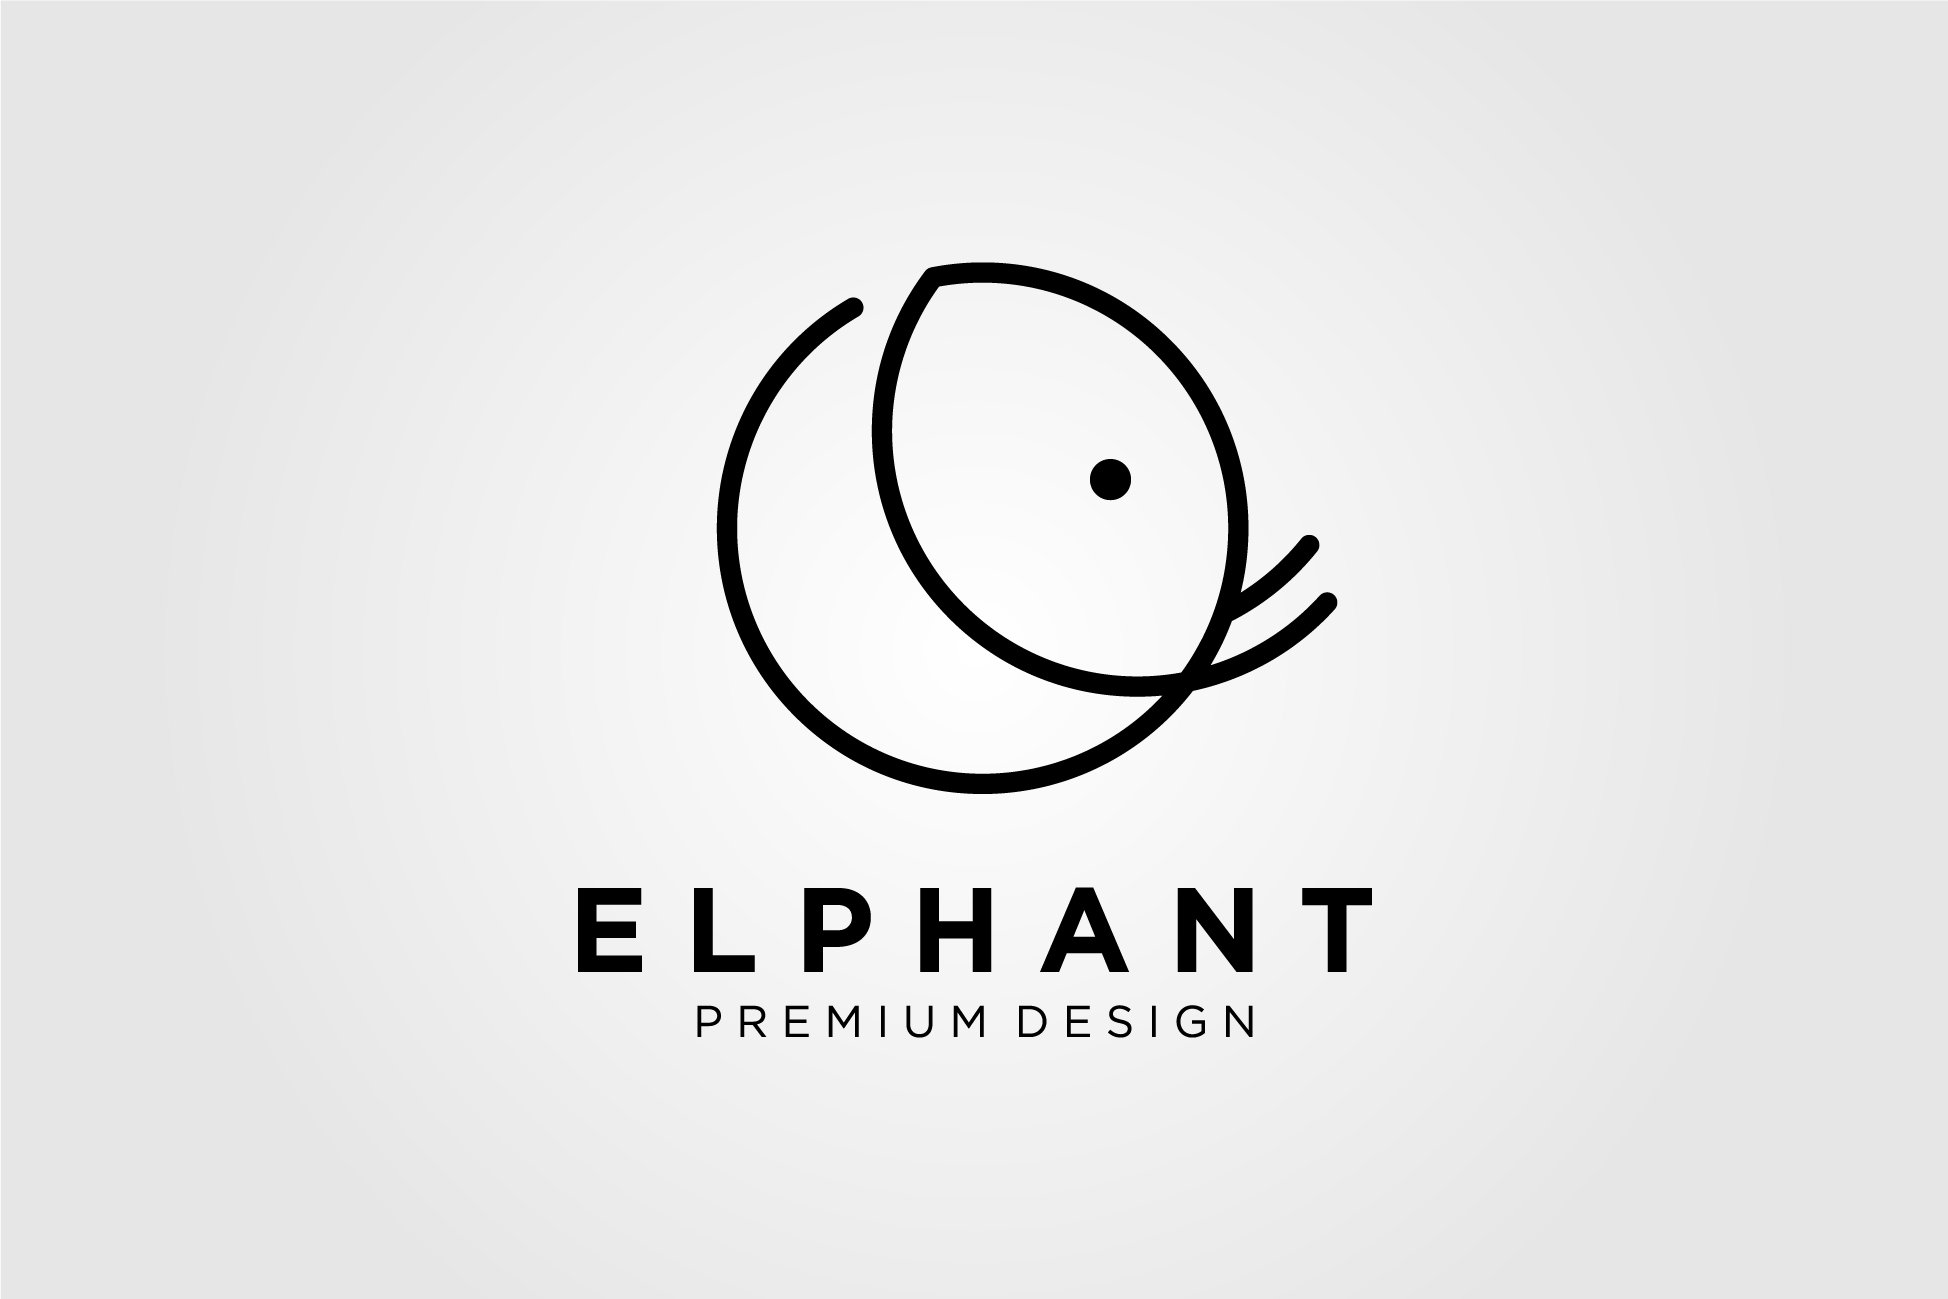 line art elephant circle logo vector cover image.